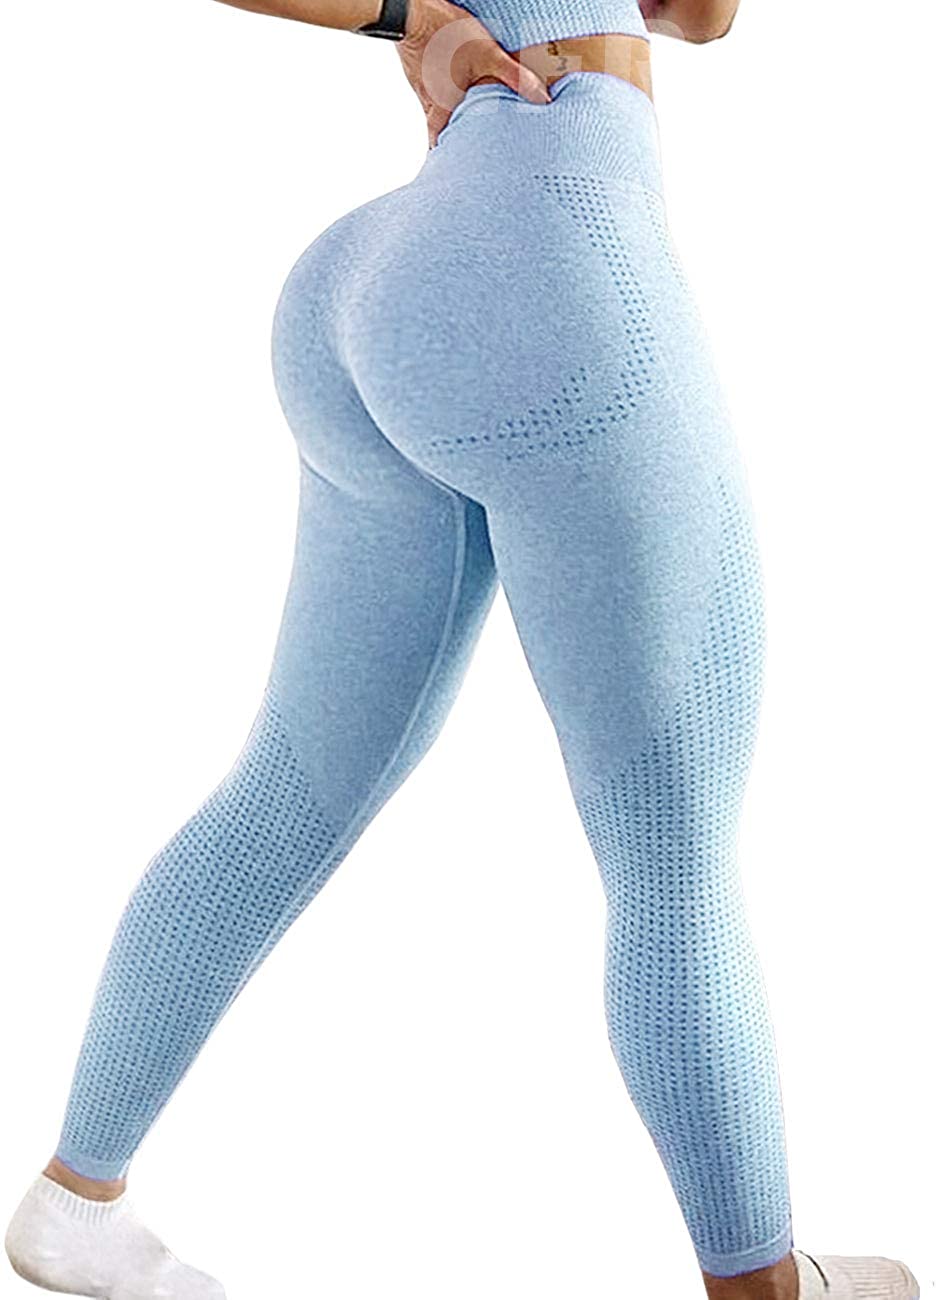 CFR High Waist Shapewear Leggings for Women Adjustable Tummy